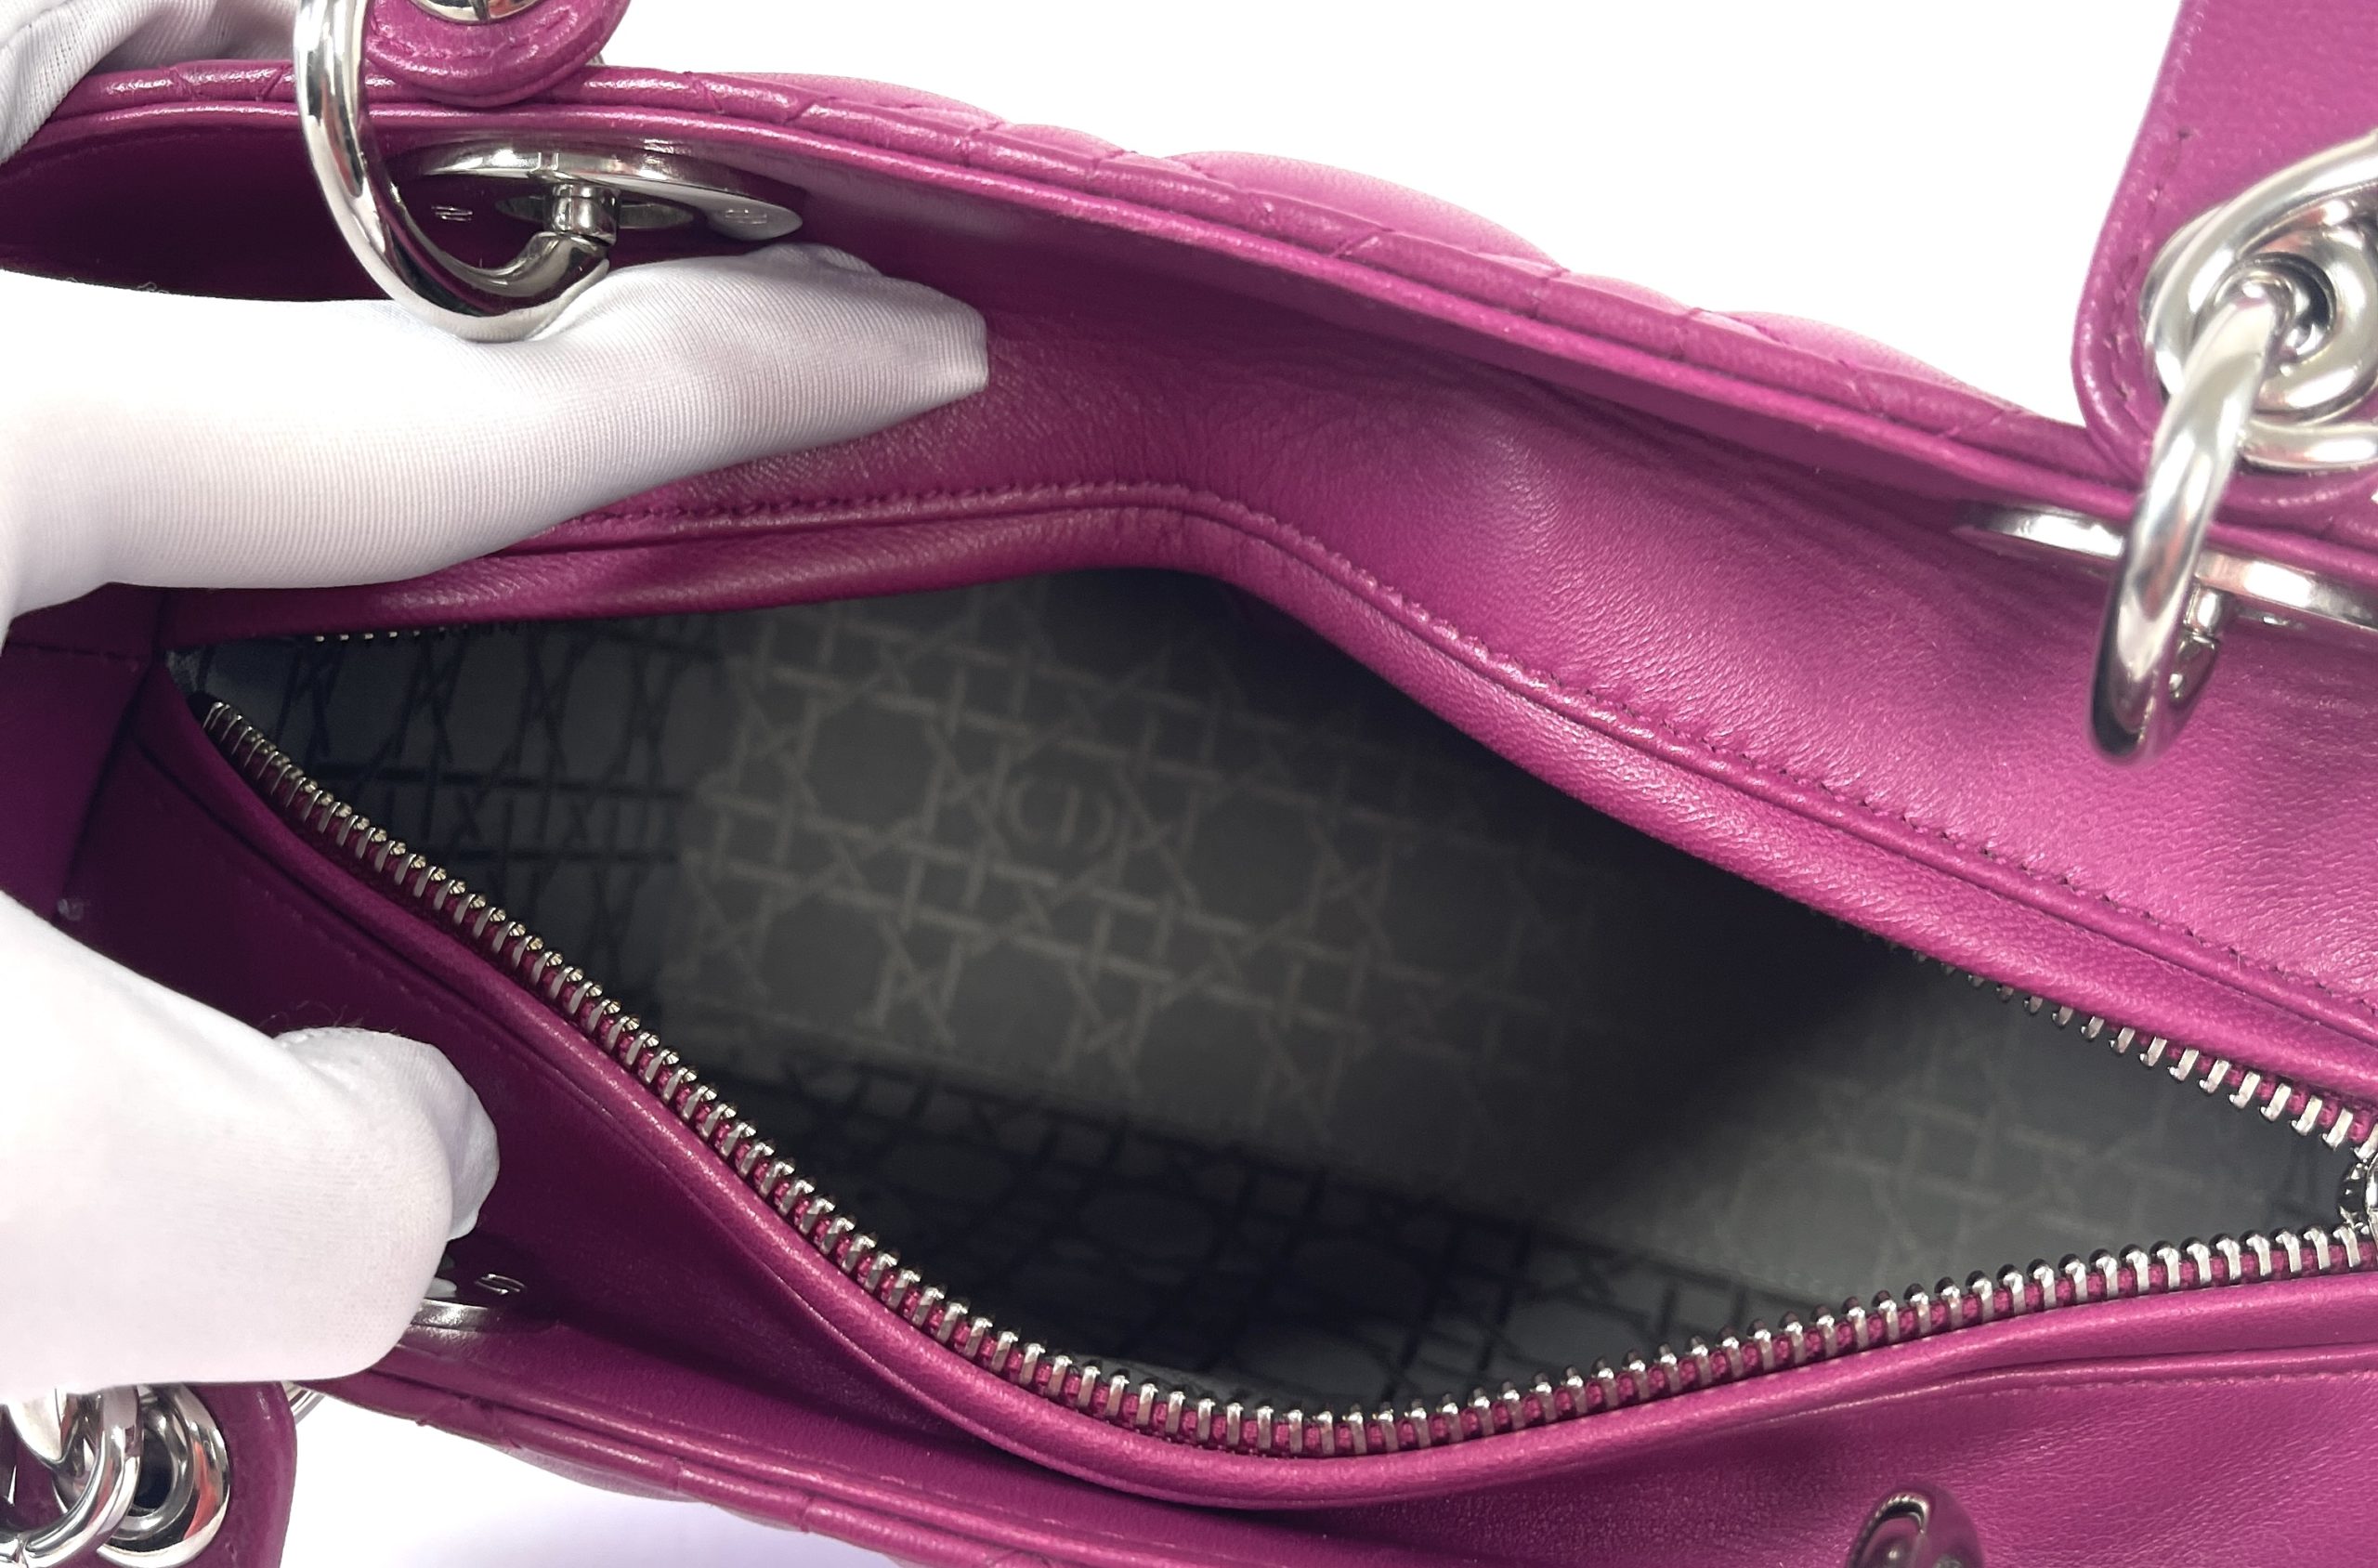 CHRISTIAN DIOR Bag - Cannage Pink Lambskin Lady Dior Bag